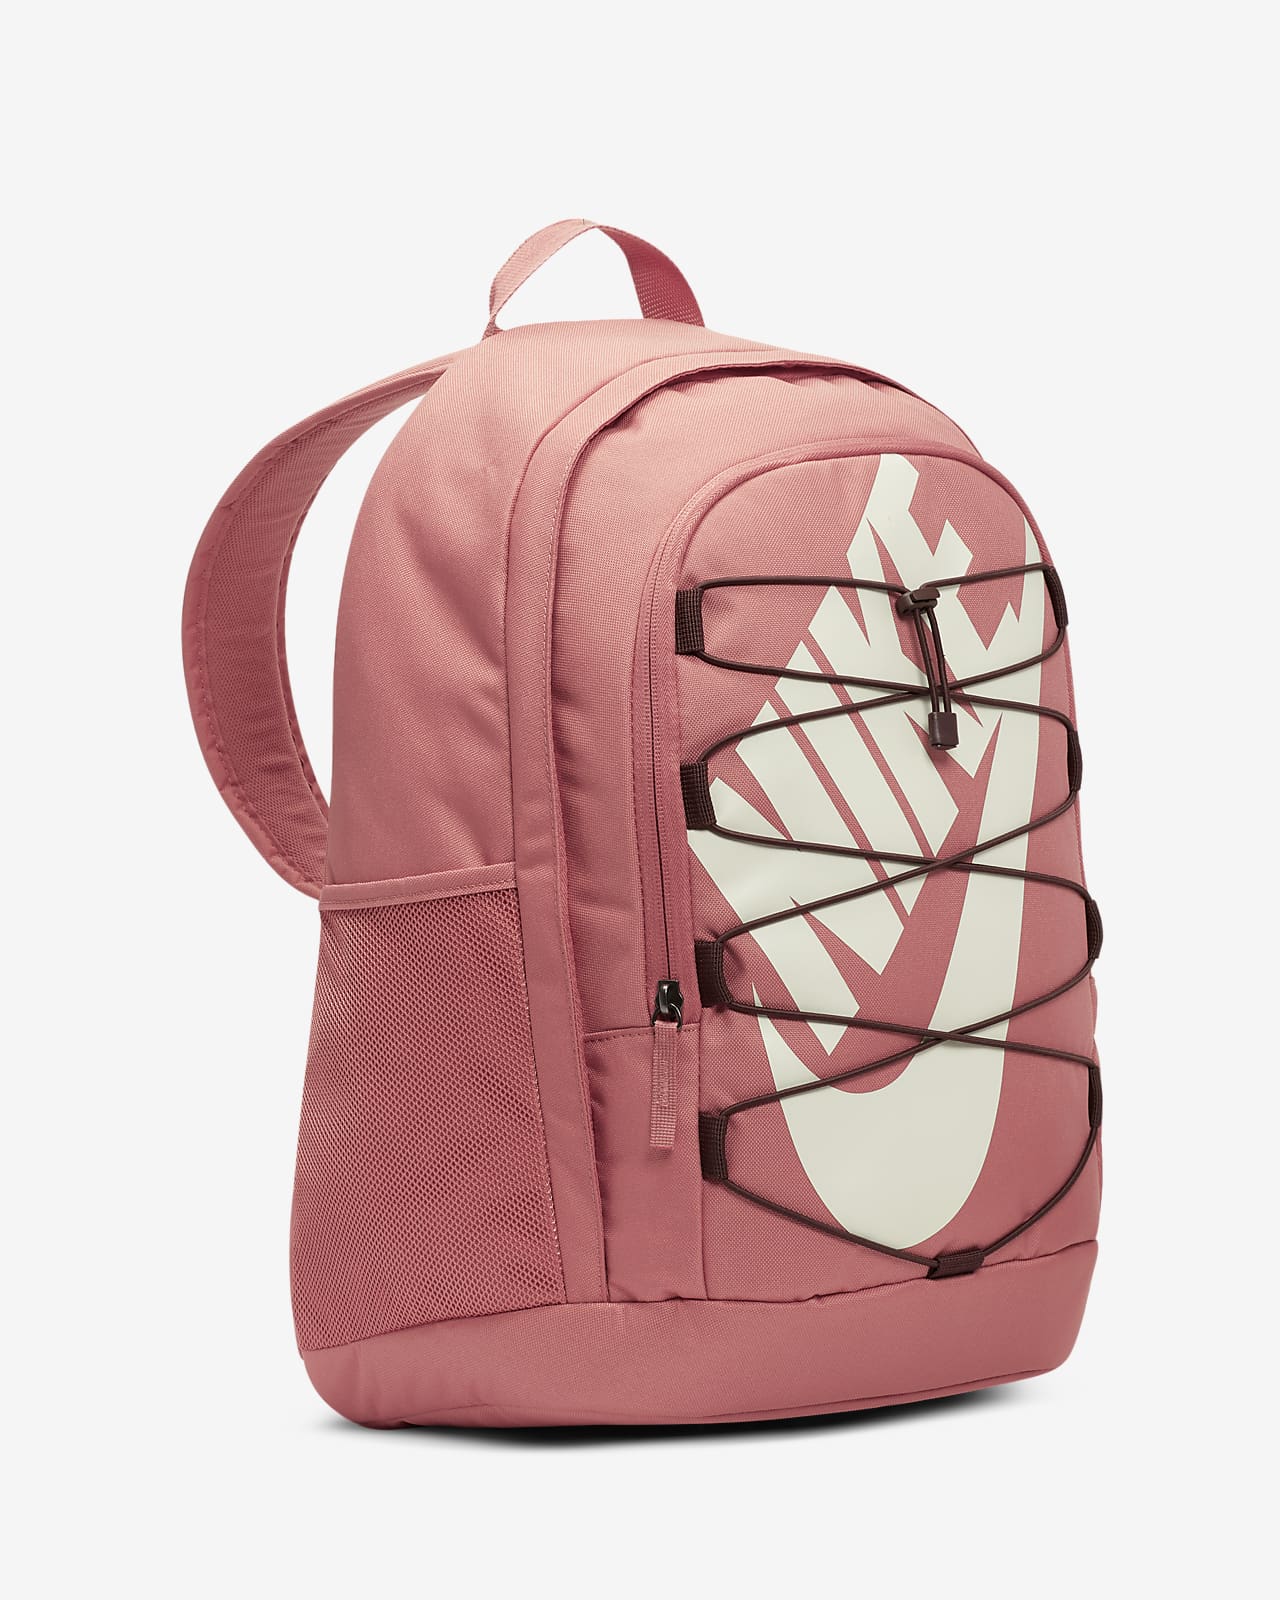 nike hayward backpack sale